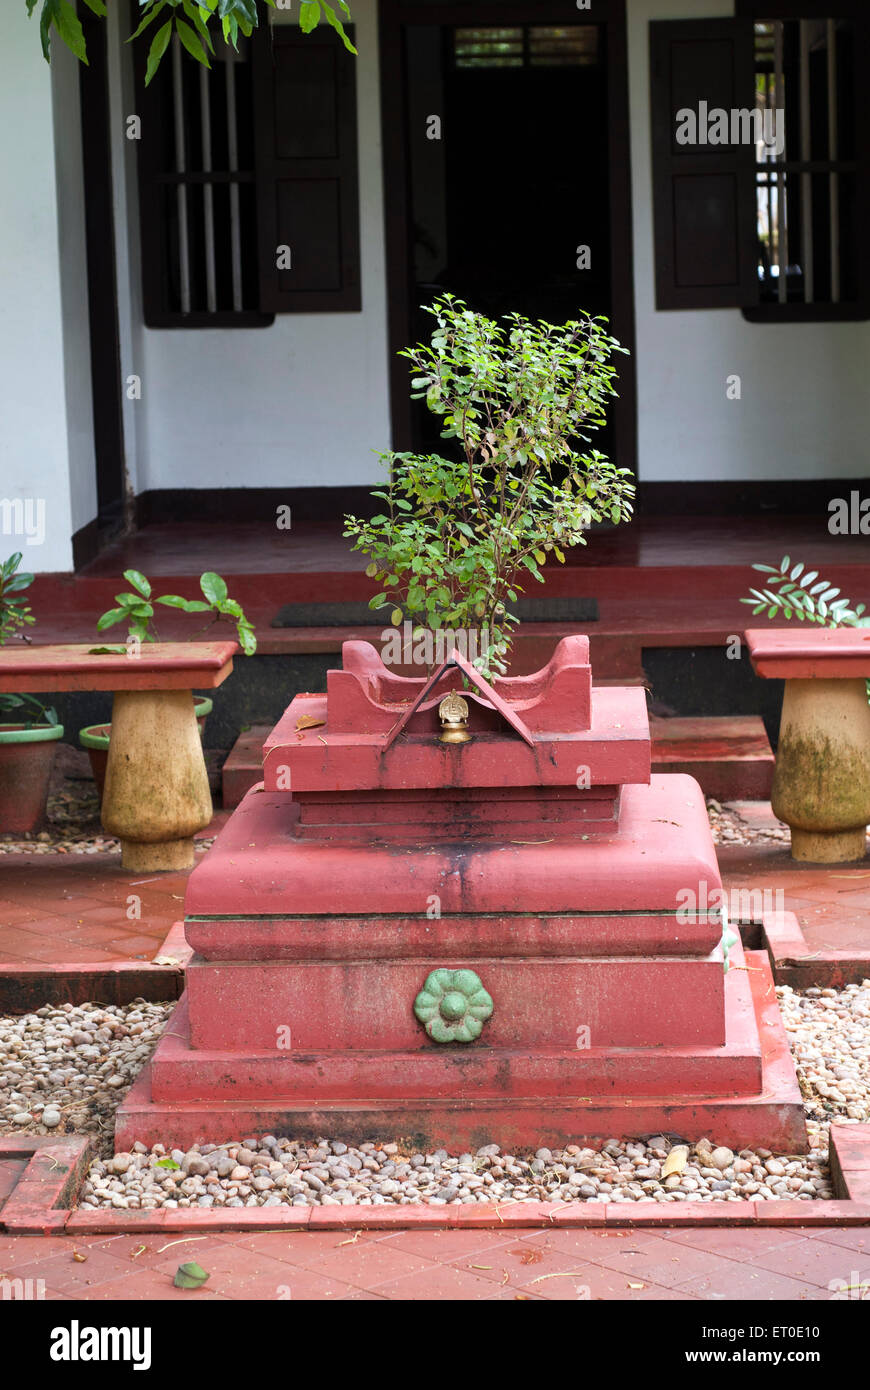 Tulsi vrindavan, pianta del basilico santo, Aleppey, Alappuzha, Kerala, India, Asia Foto Stock